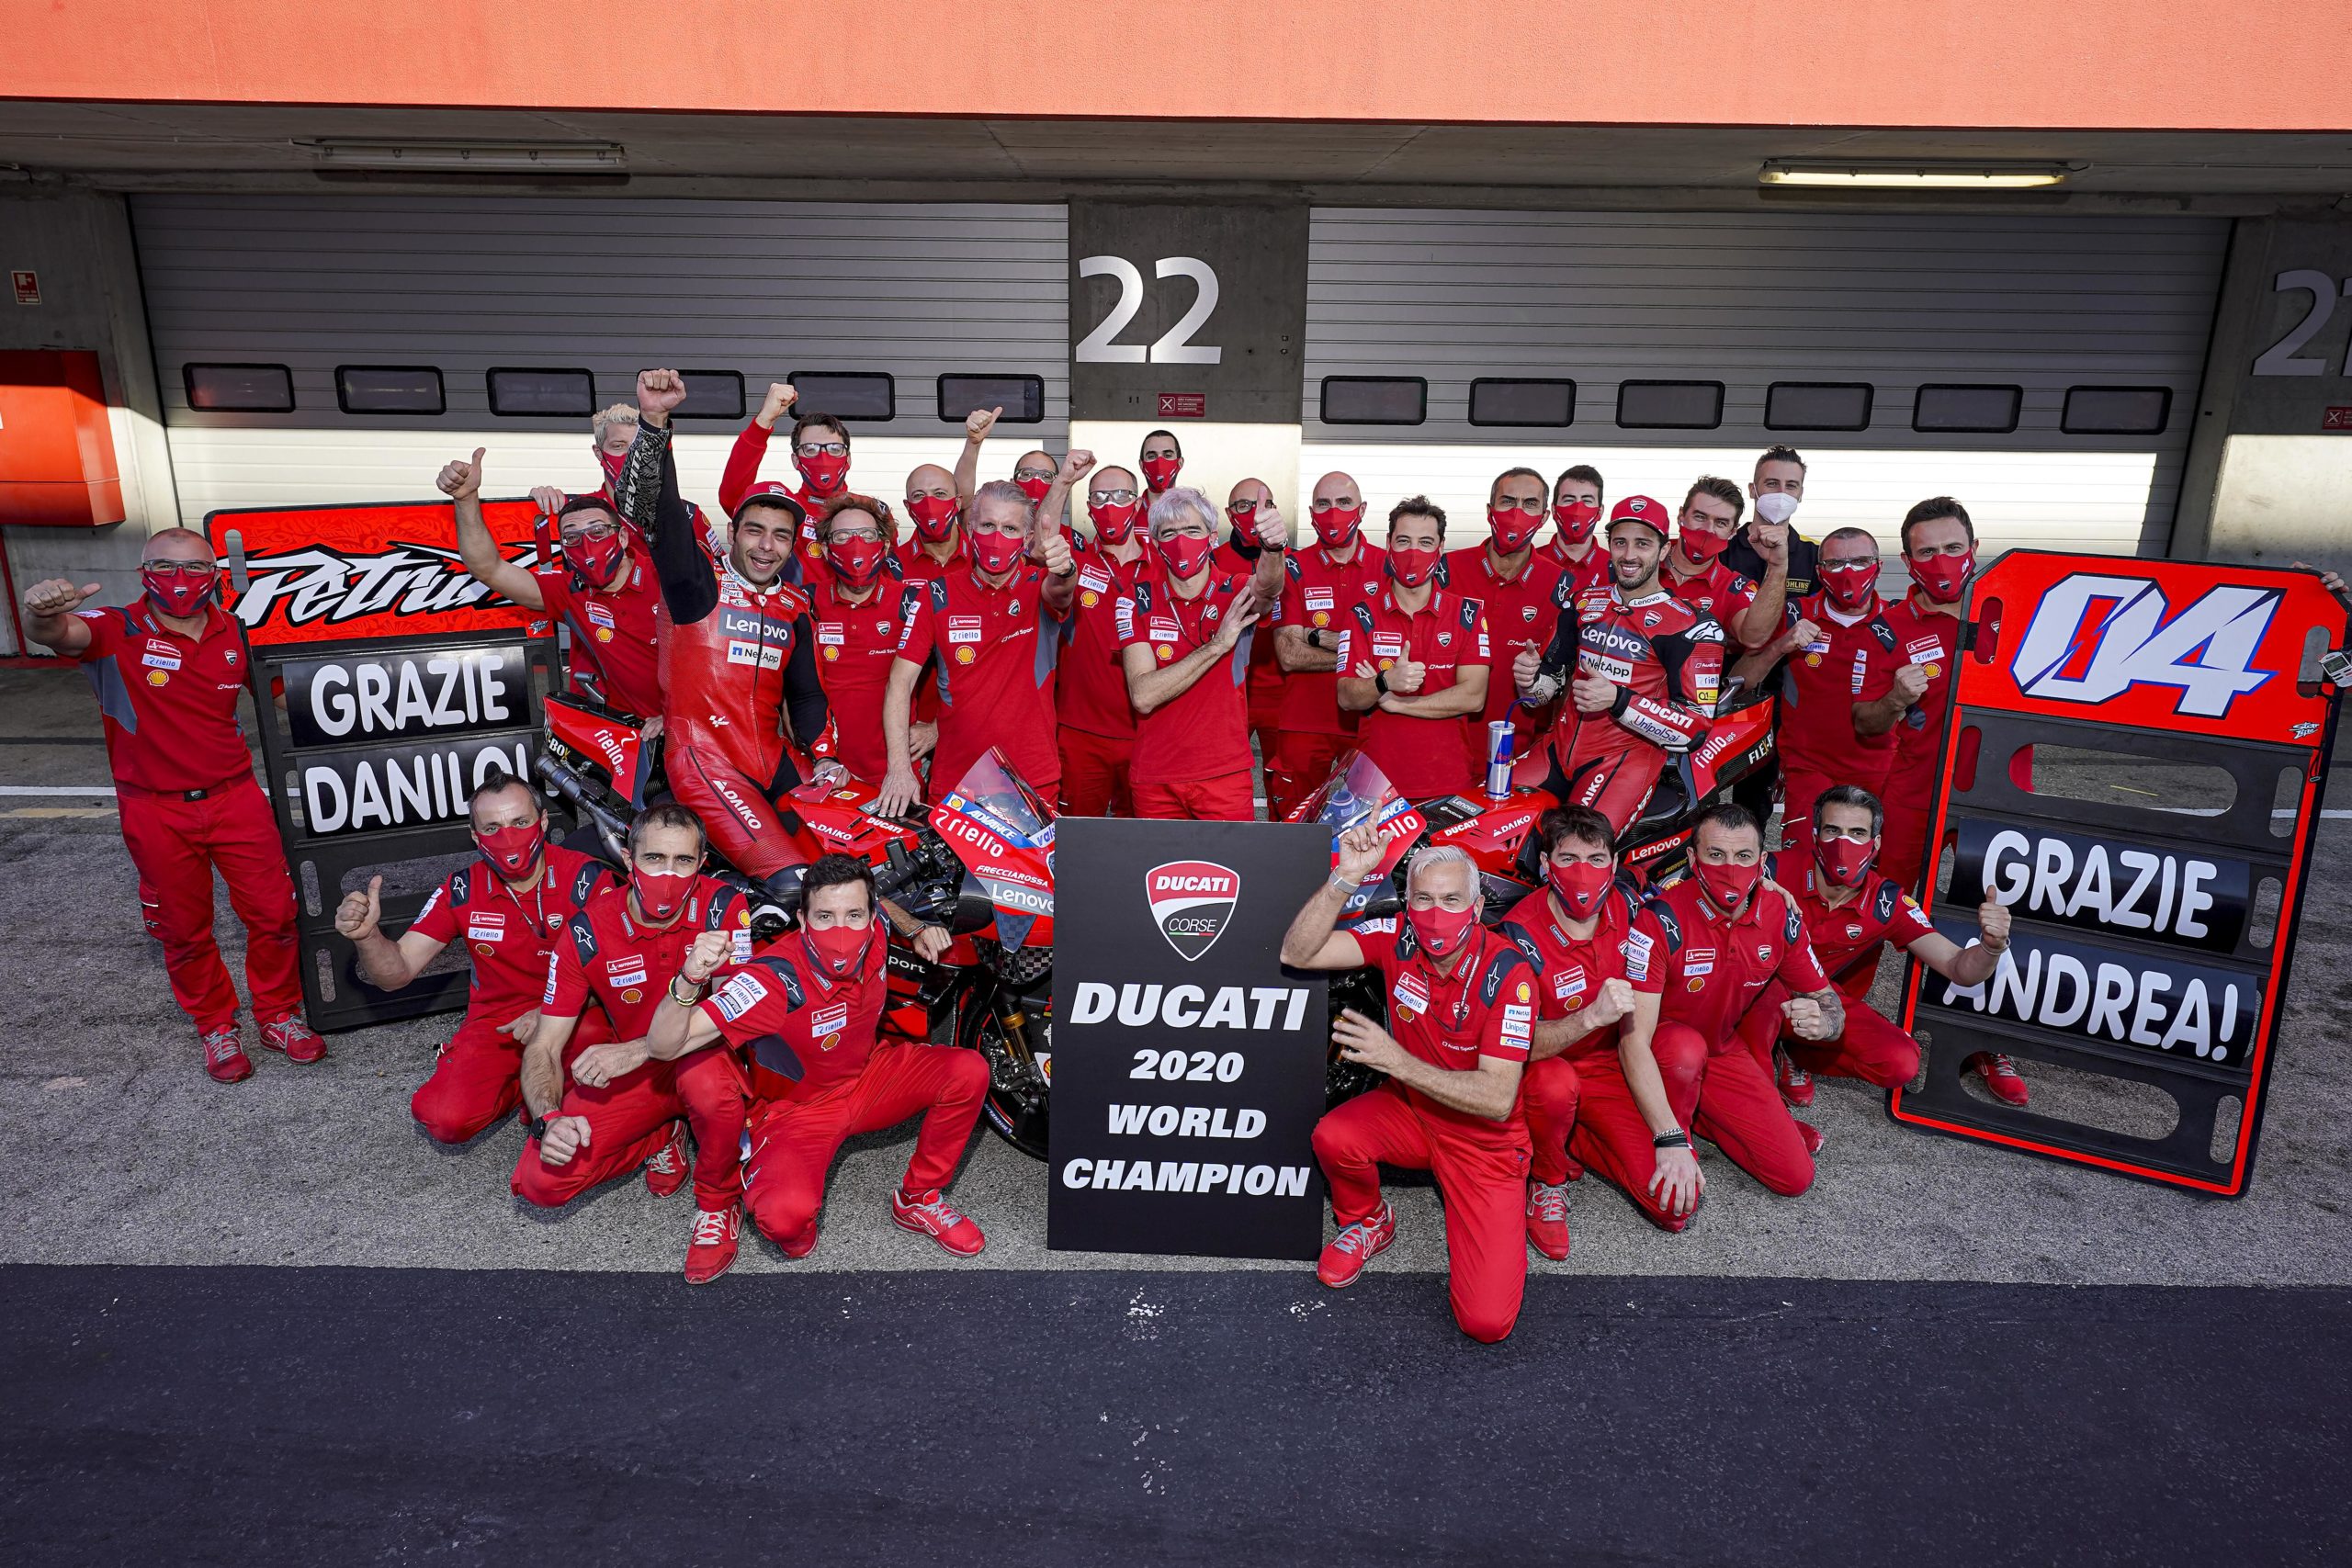 Ducati Team is 2020 Constructors’ World Champion